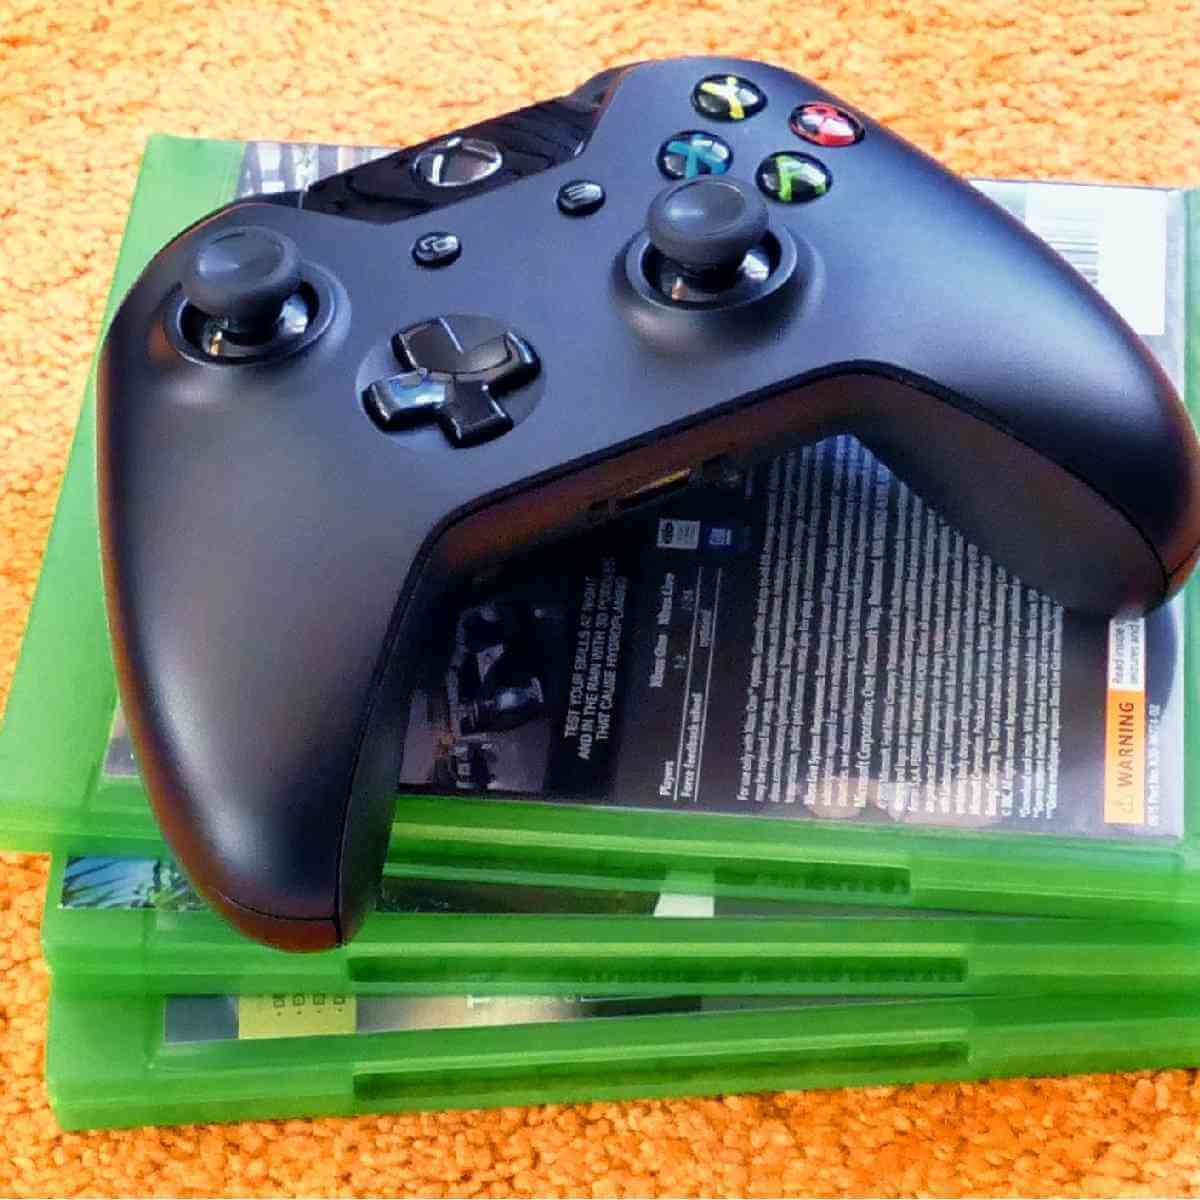 Roblox Xbox One Controller